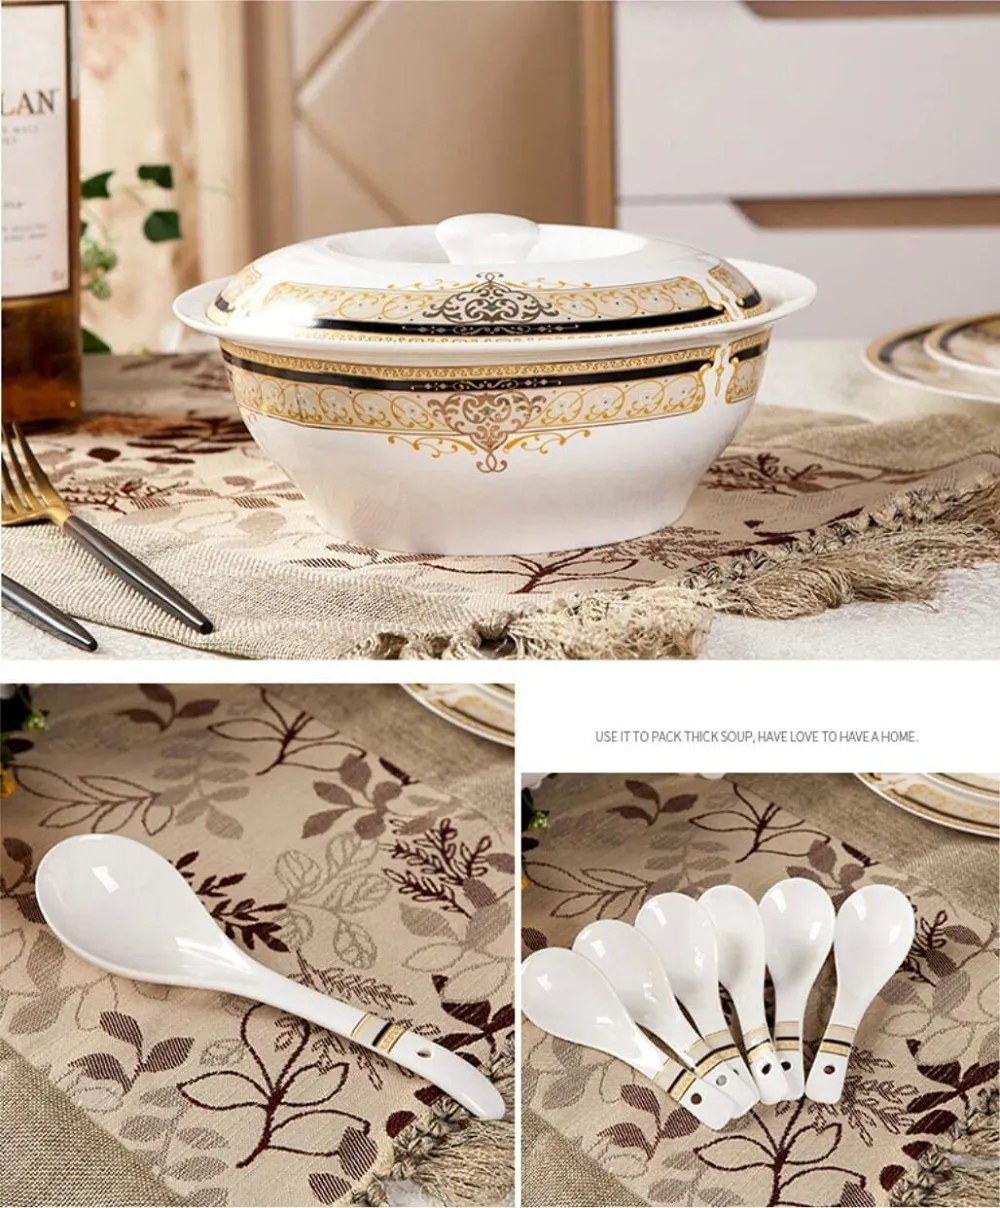 60 Piece Porcelain Dinnerware Set, Plate and Bowl Set, European-Style Elegant Tableware Set, Jingdezhen Bone China Dish Set, Service for 8-10